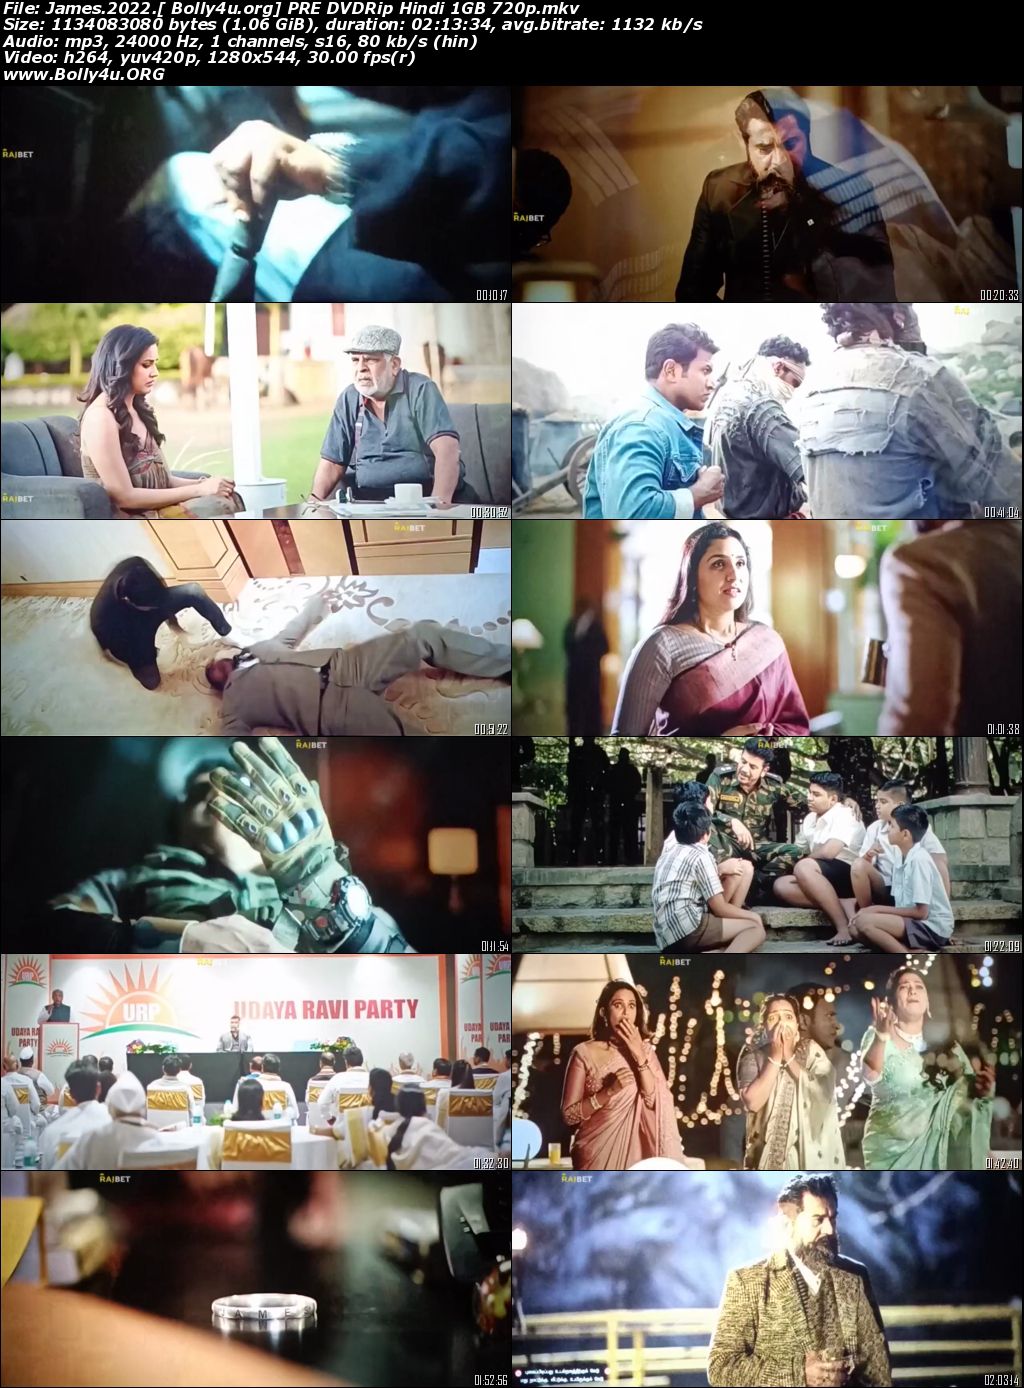 James 2022 Pre DVDRip Hindi Dubbed Movie 720p 480p Download